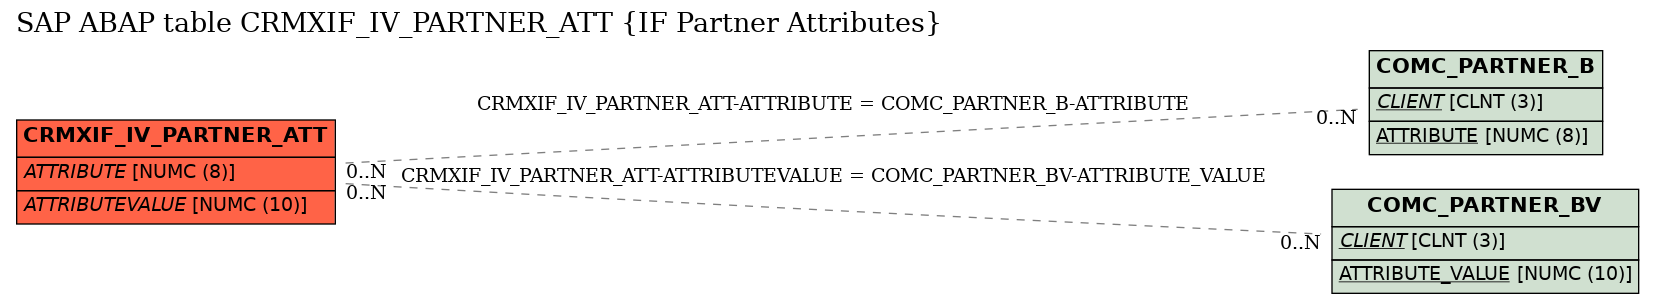 E-R Diagram for table CRMXIF_IV_PARTNER_ATT (IF Partner Attributes)